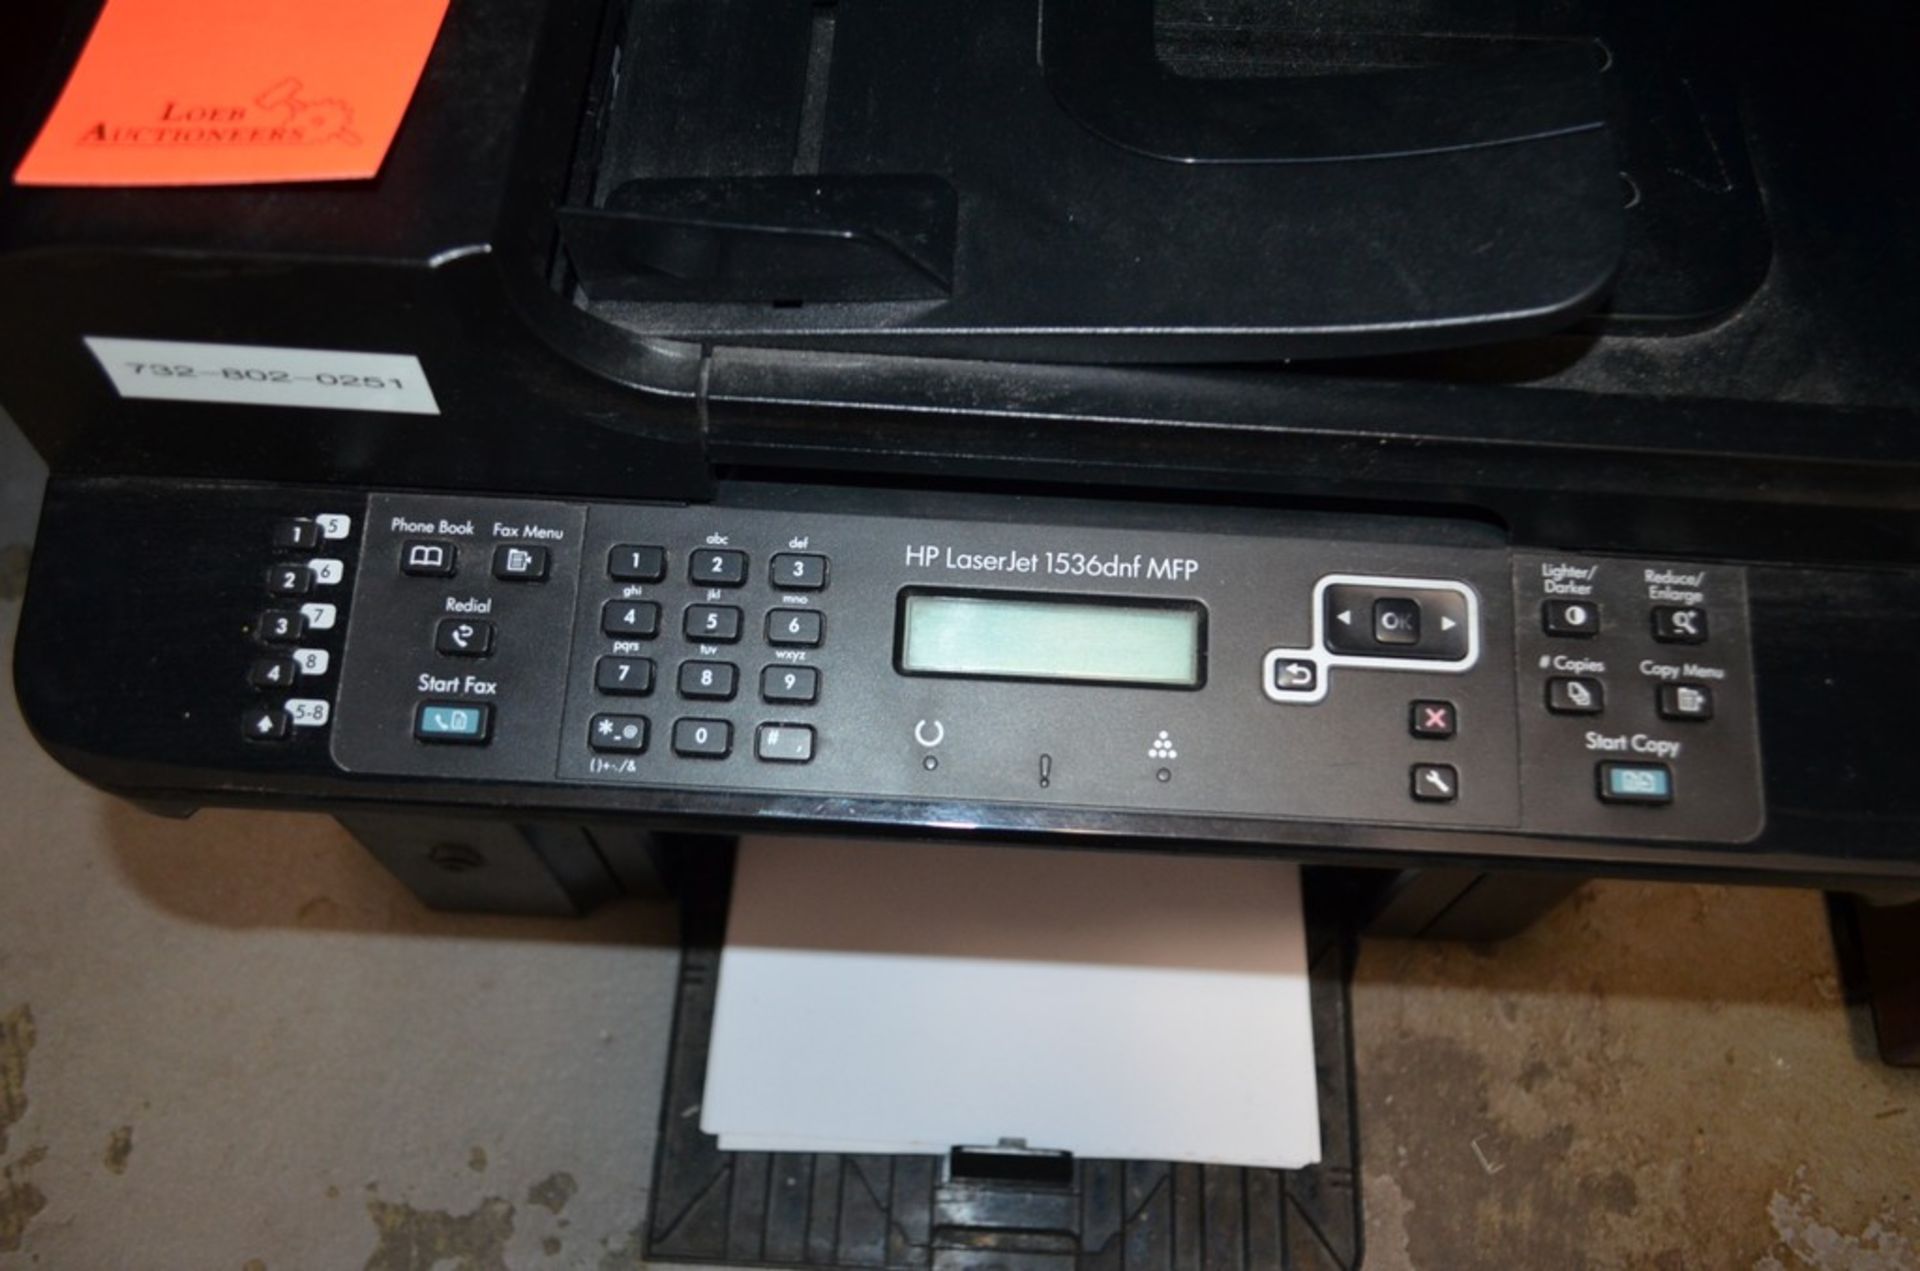 Hewlett Packard LaserJet 1536dnf MFP Printer (Under Desk); Location in Plant: Large Training Room - Image 2 of 3